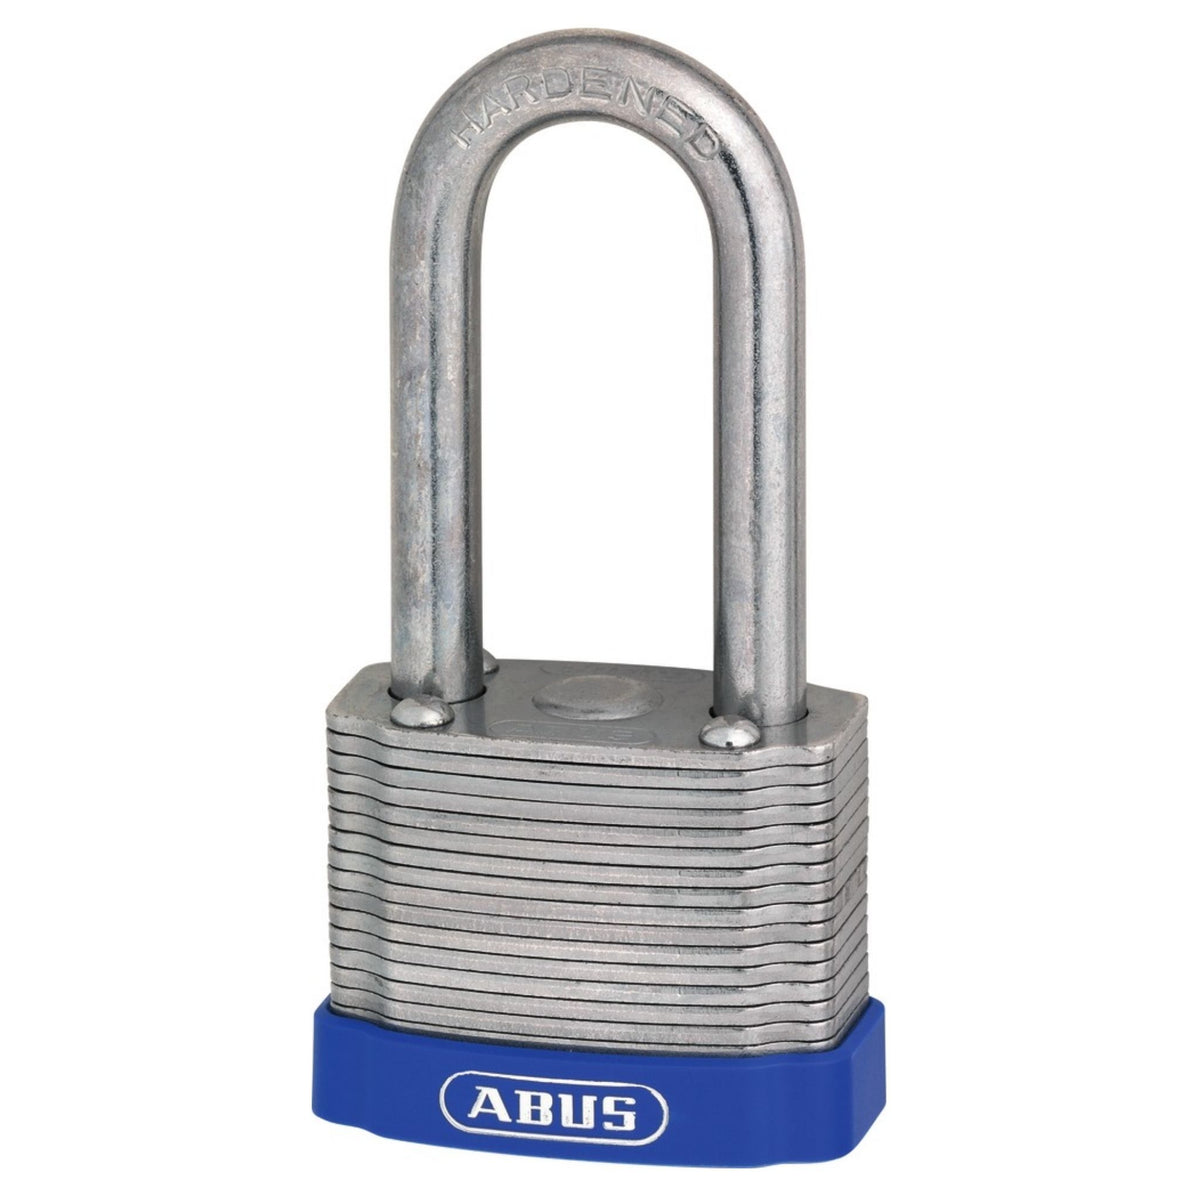 Abus 4150/HB50 KA Laminated Steel Lock with Eterna Coating and 2-Inch Shackle Keyed Alike Locks - The Lock Source